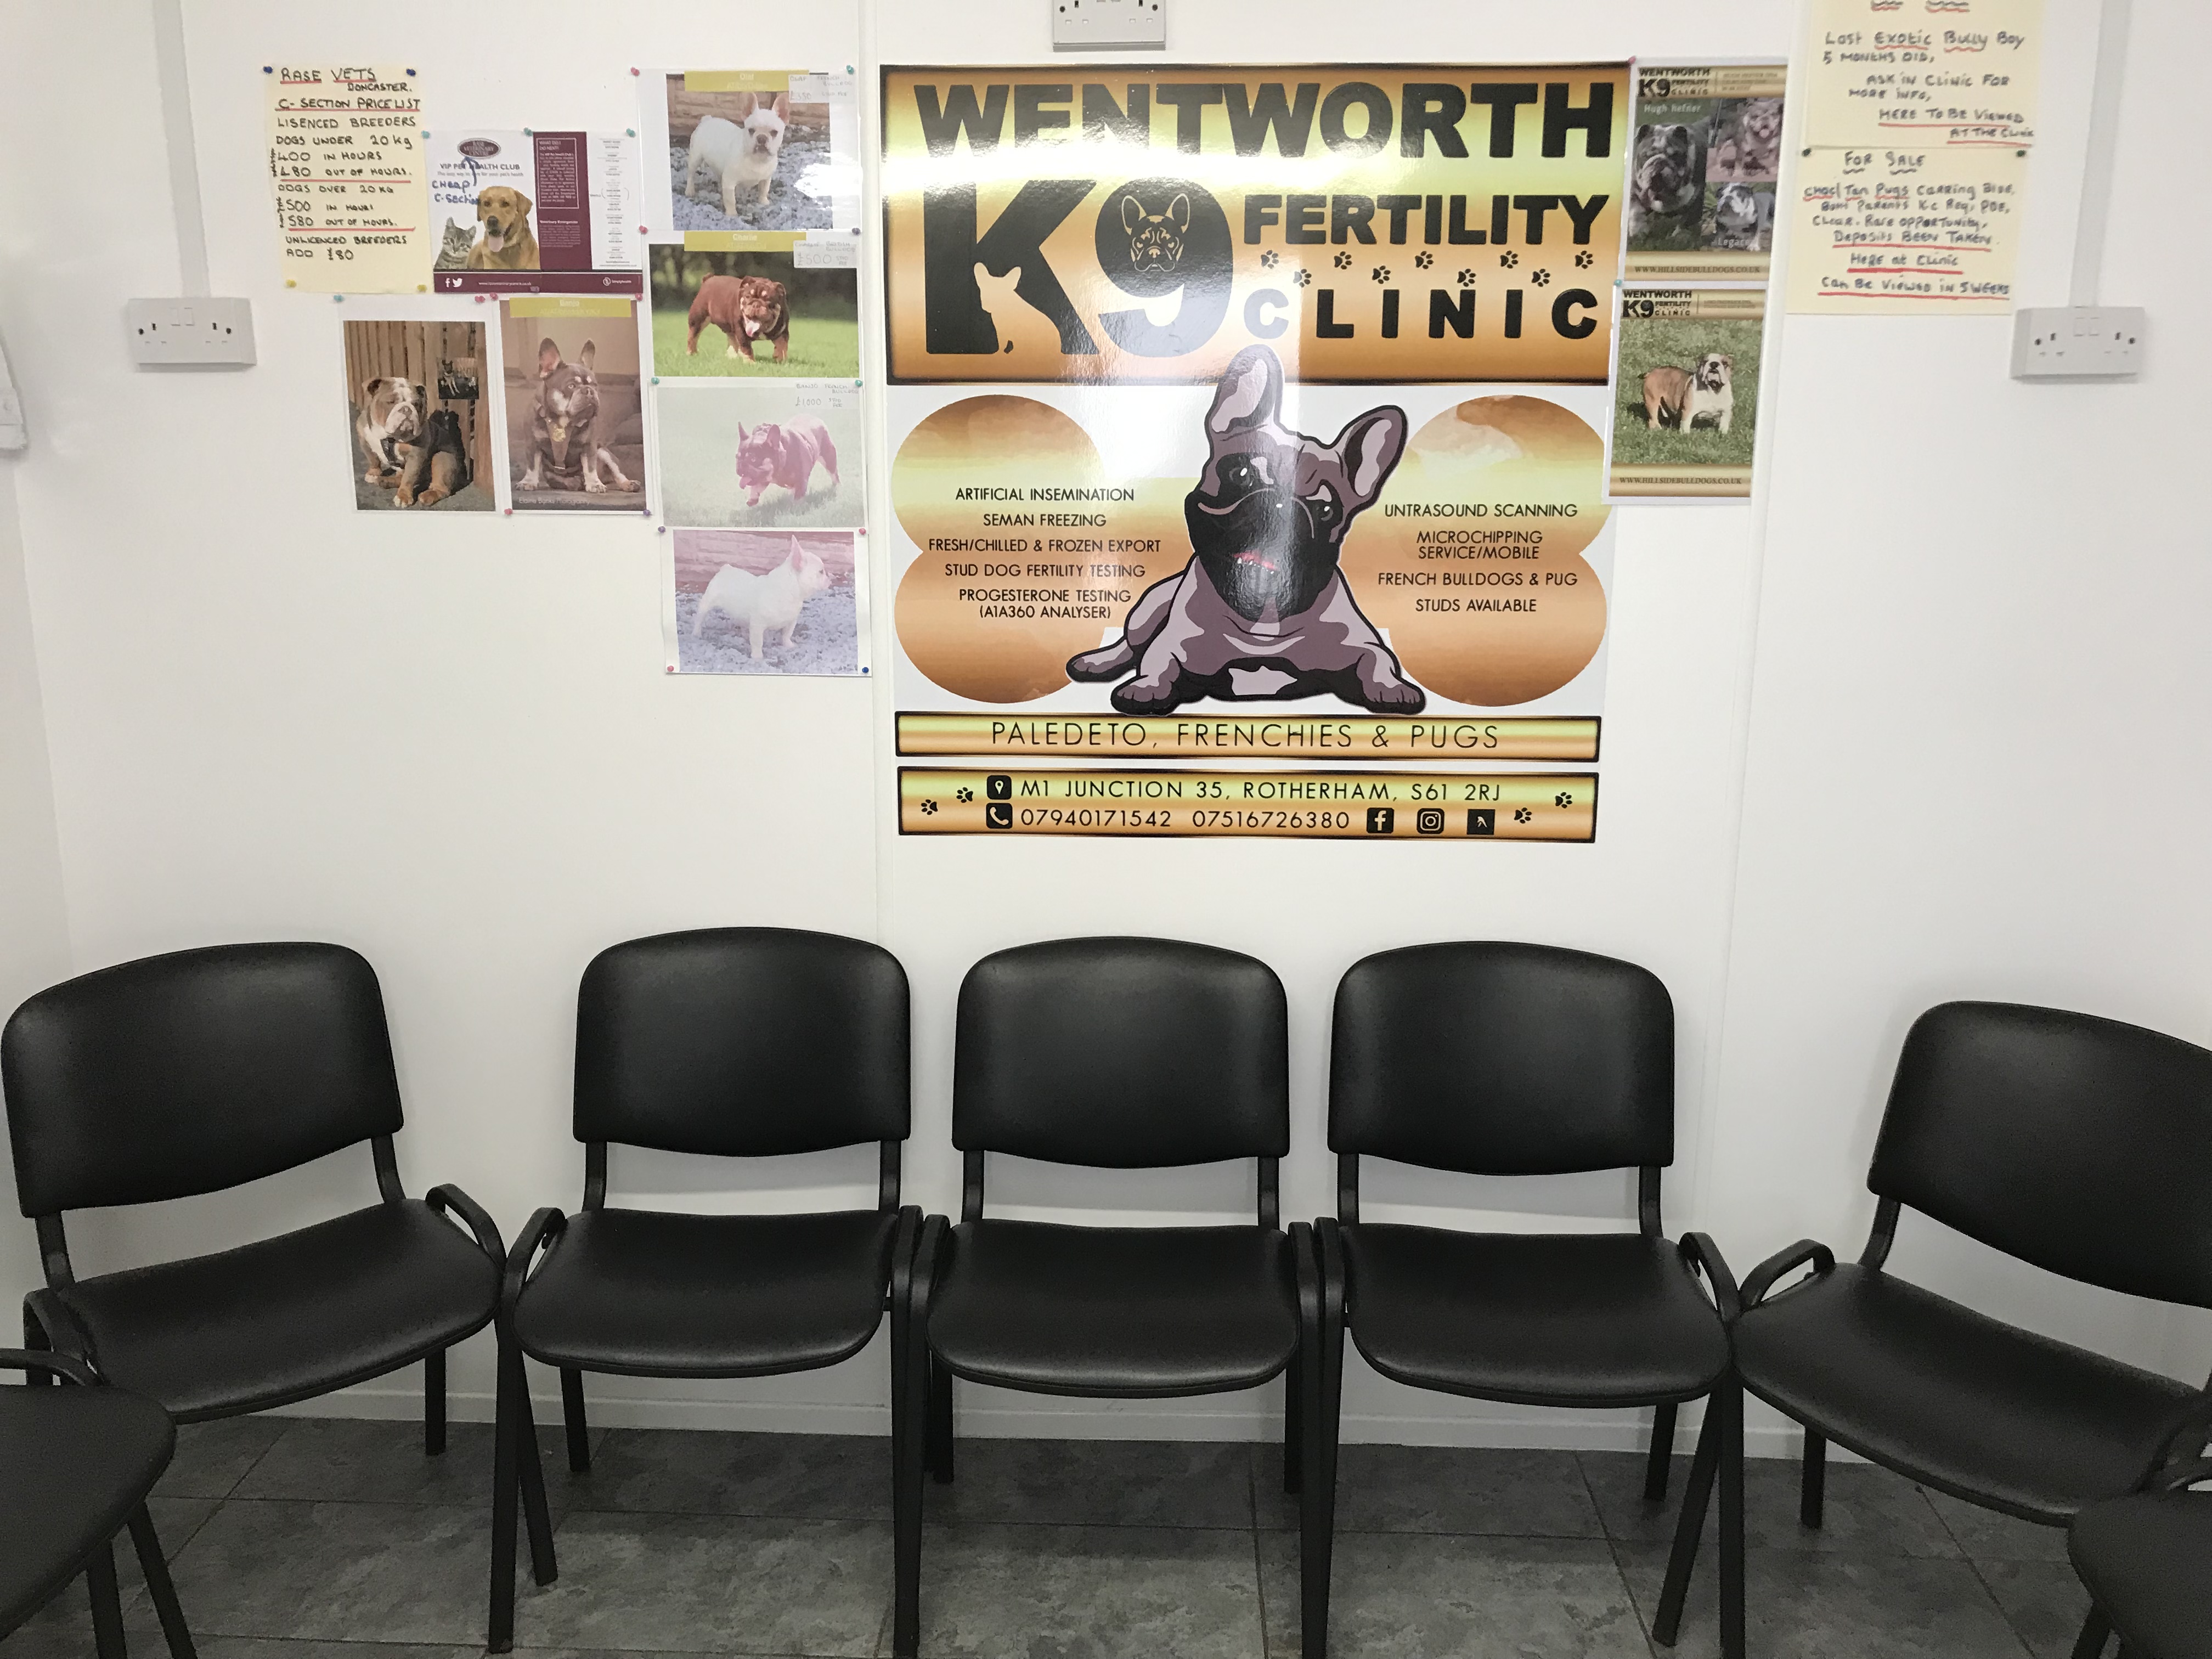 Wentowrth K9 Fertility Clinic office waiting room